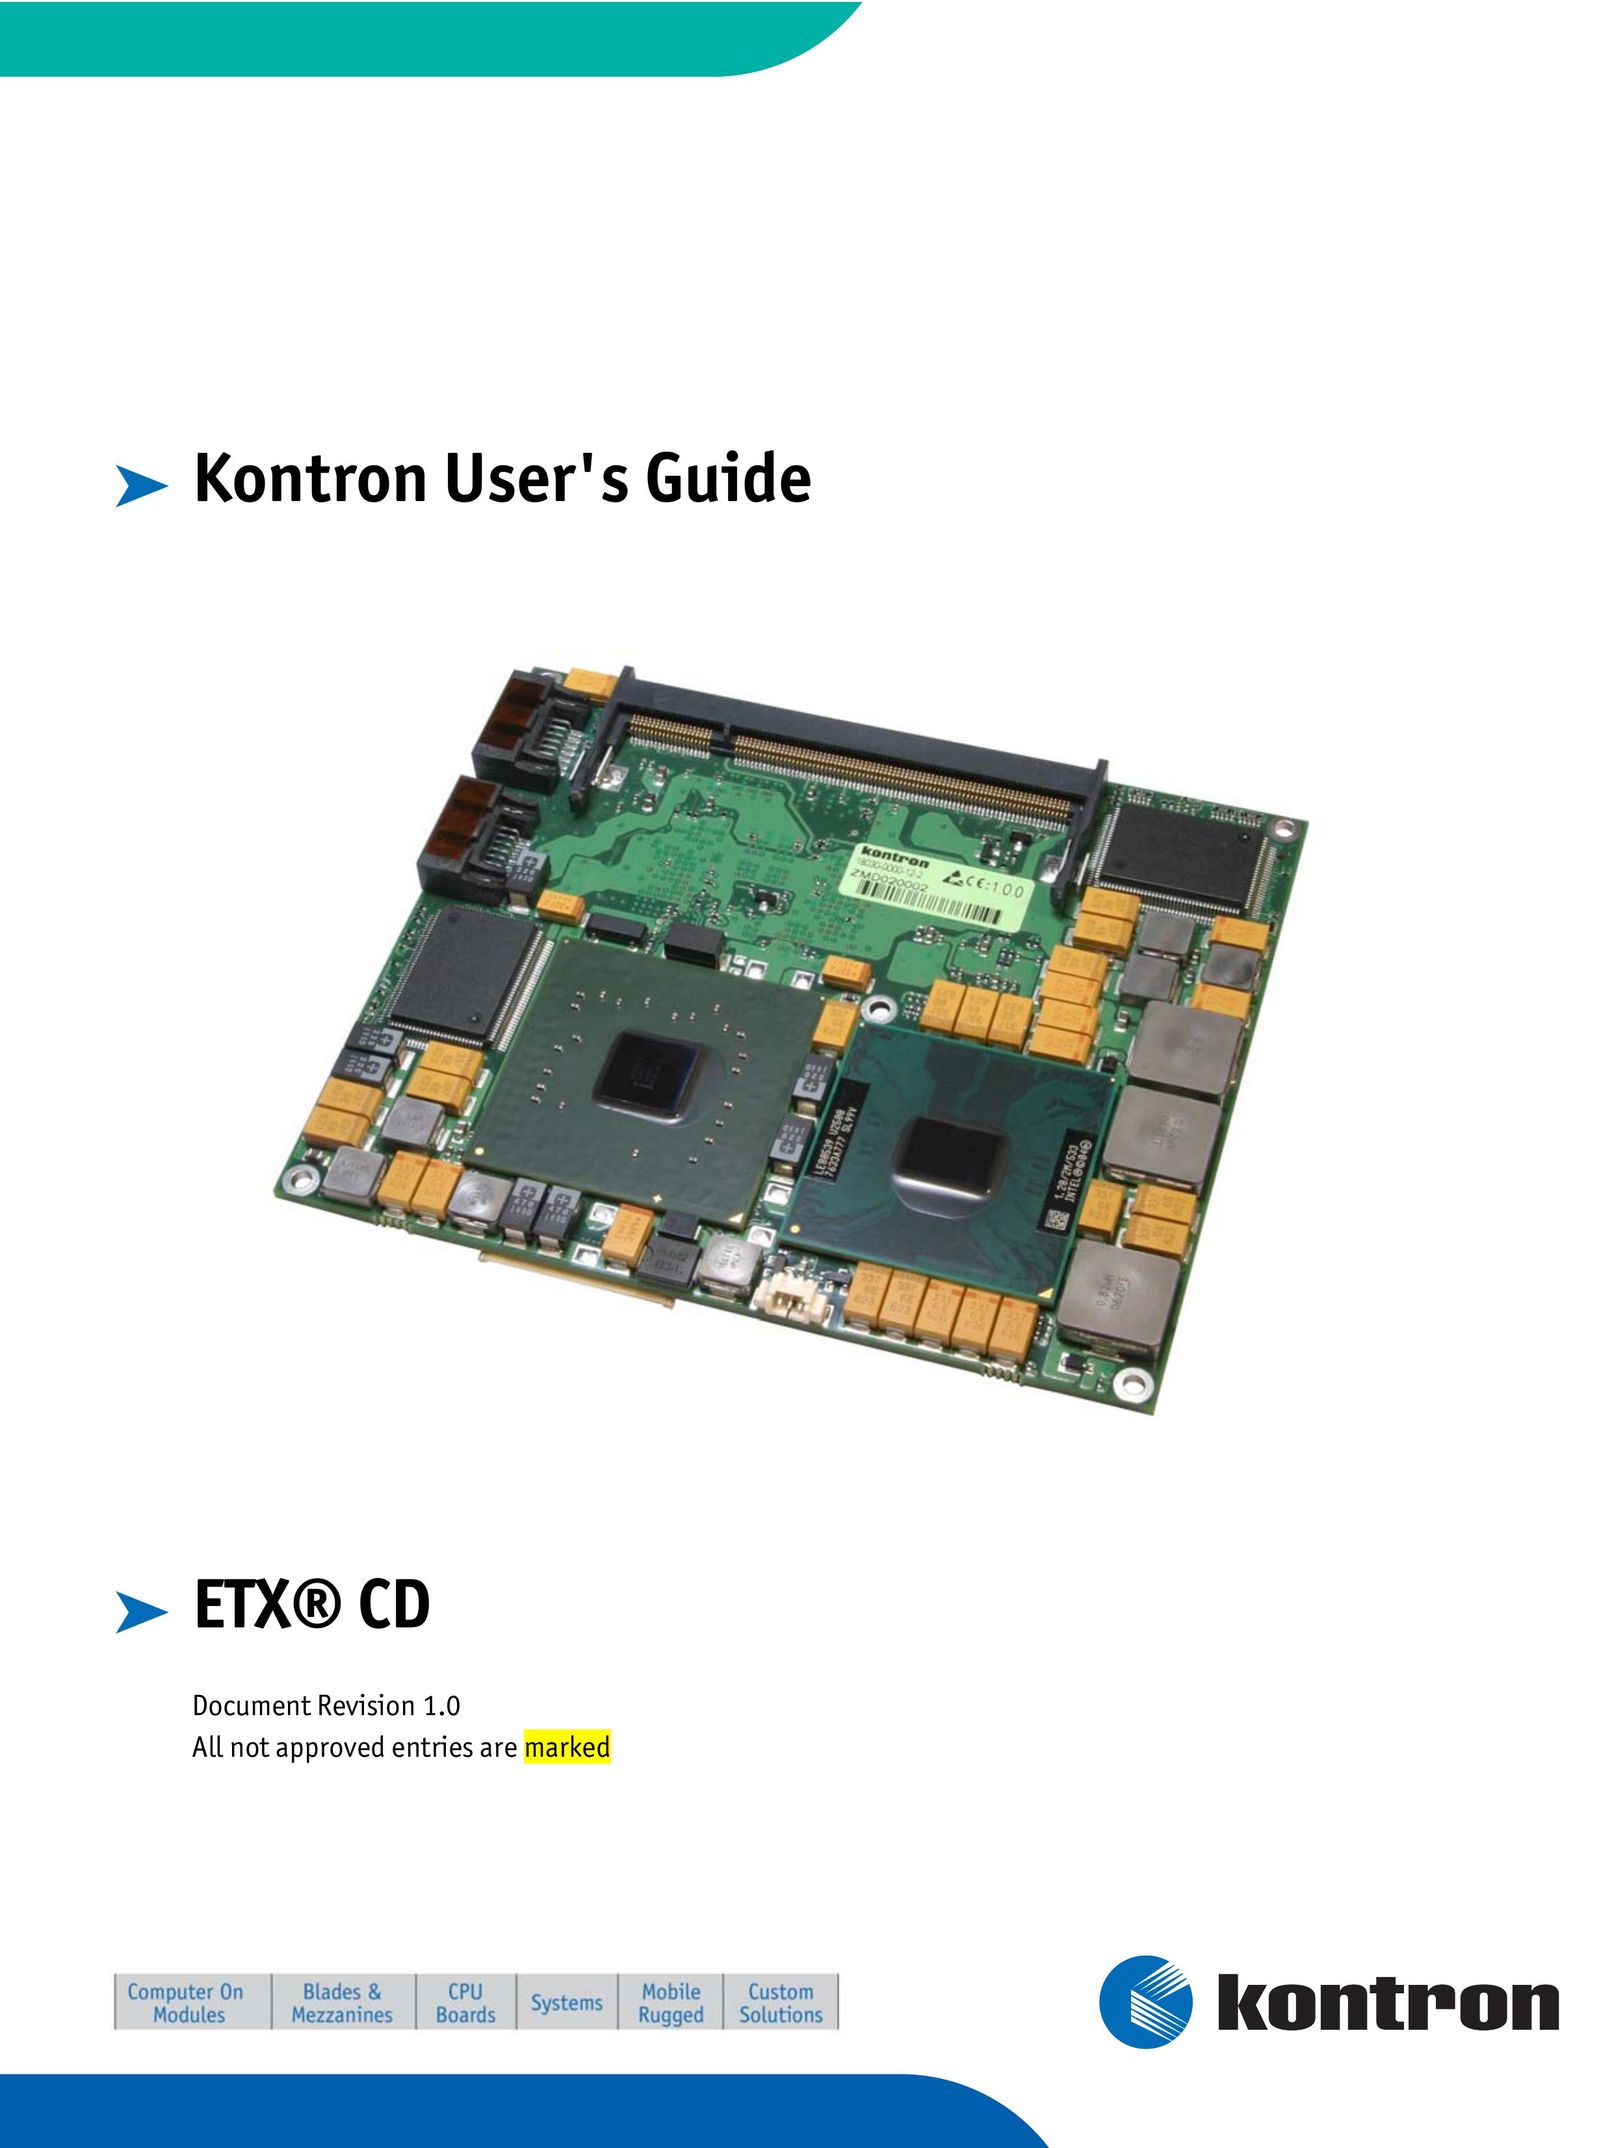 Intel ETX CD Switch User Manual